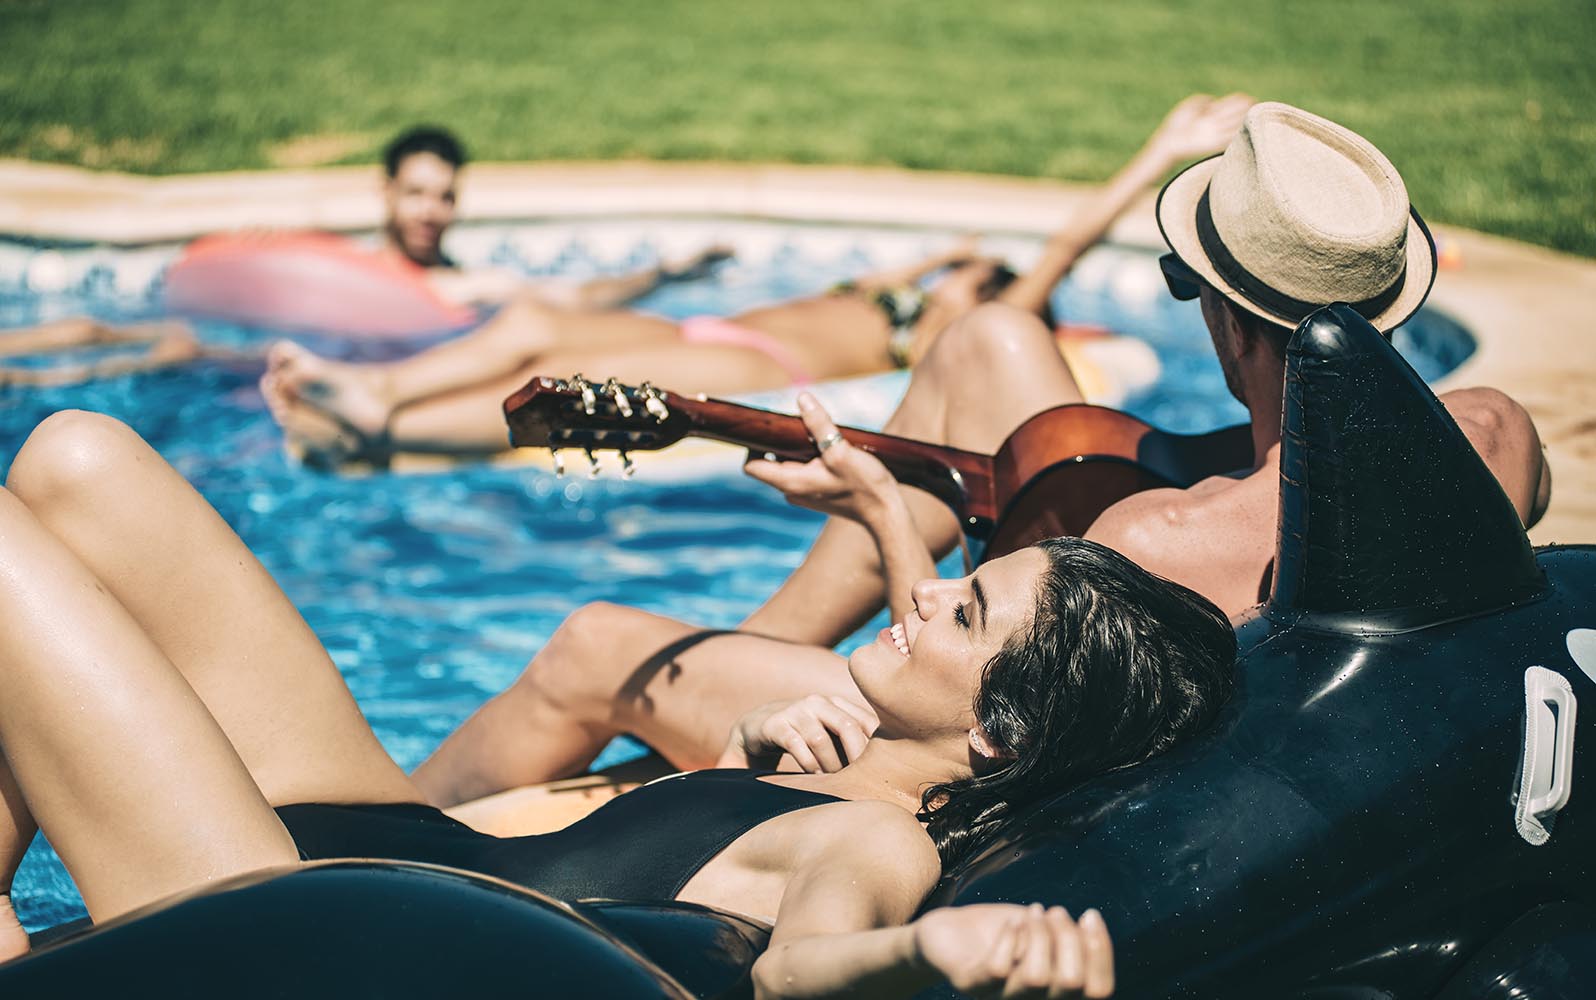 Men and women relaxing in poolside